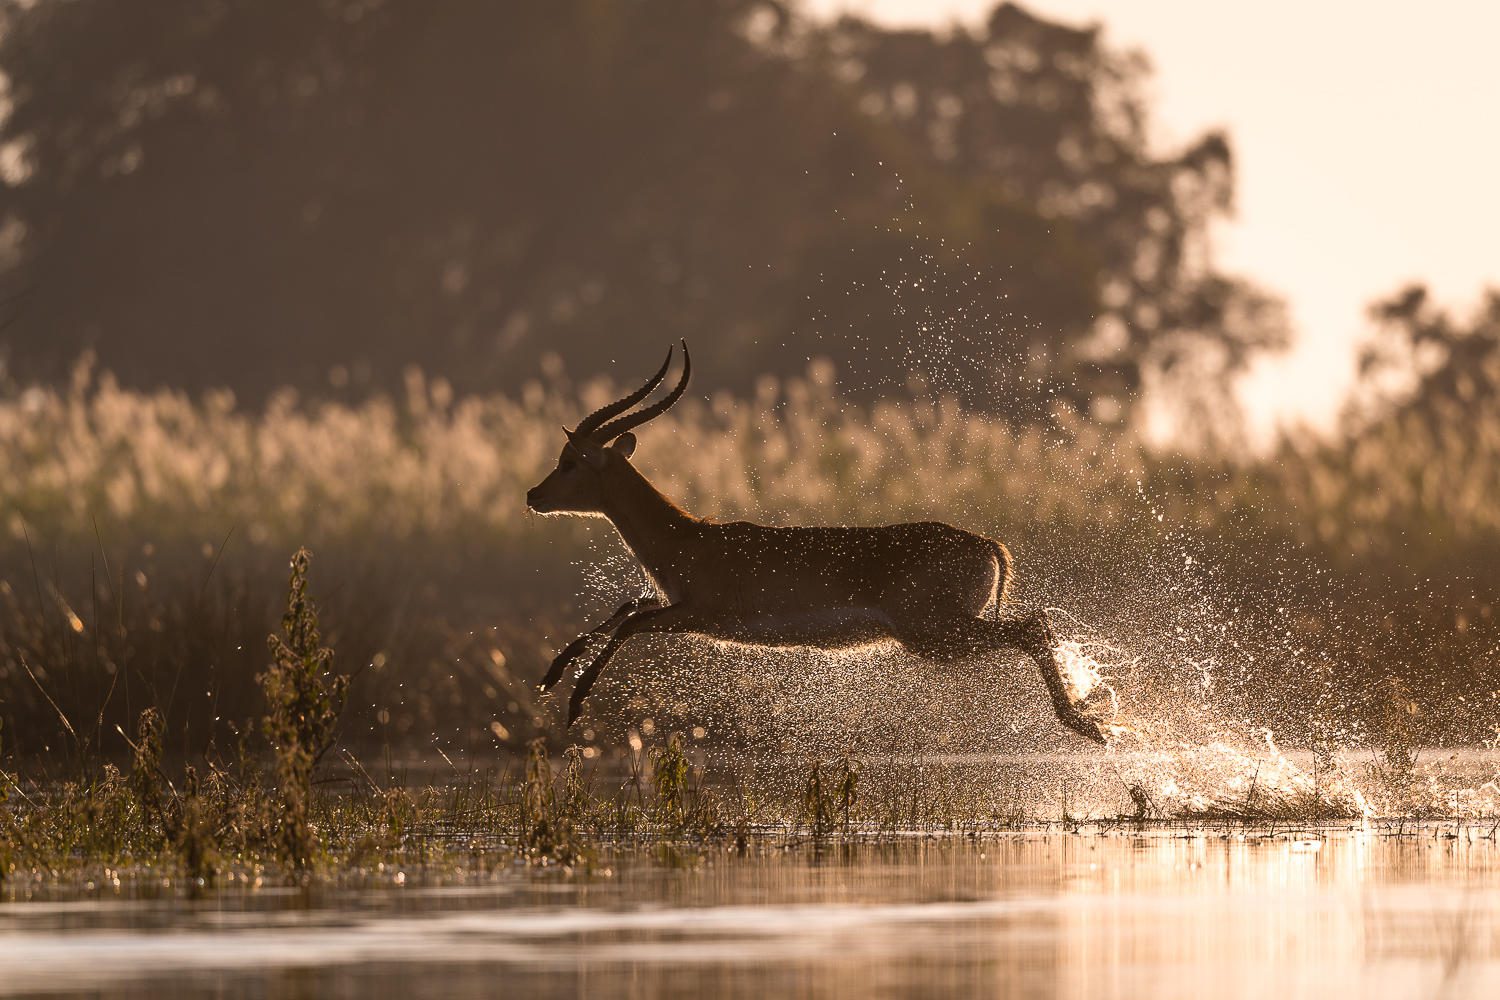 An antelope runs through the water at sunset.